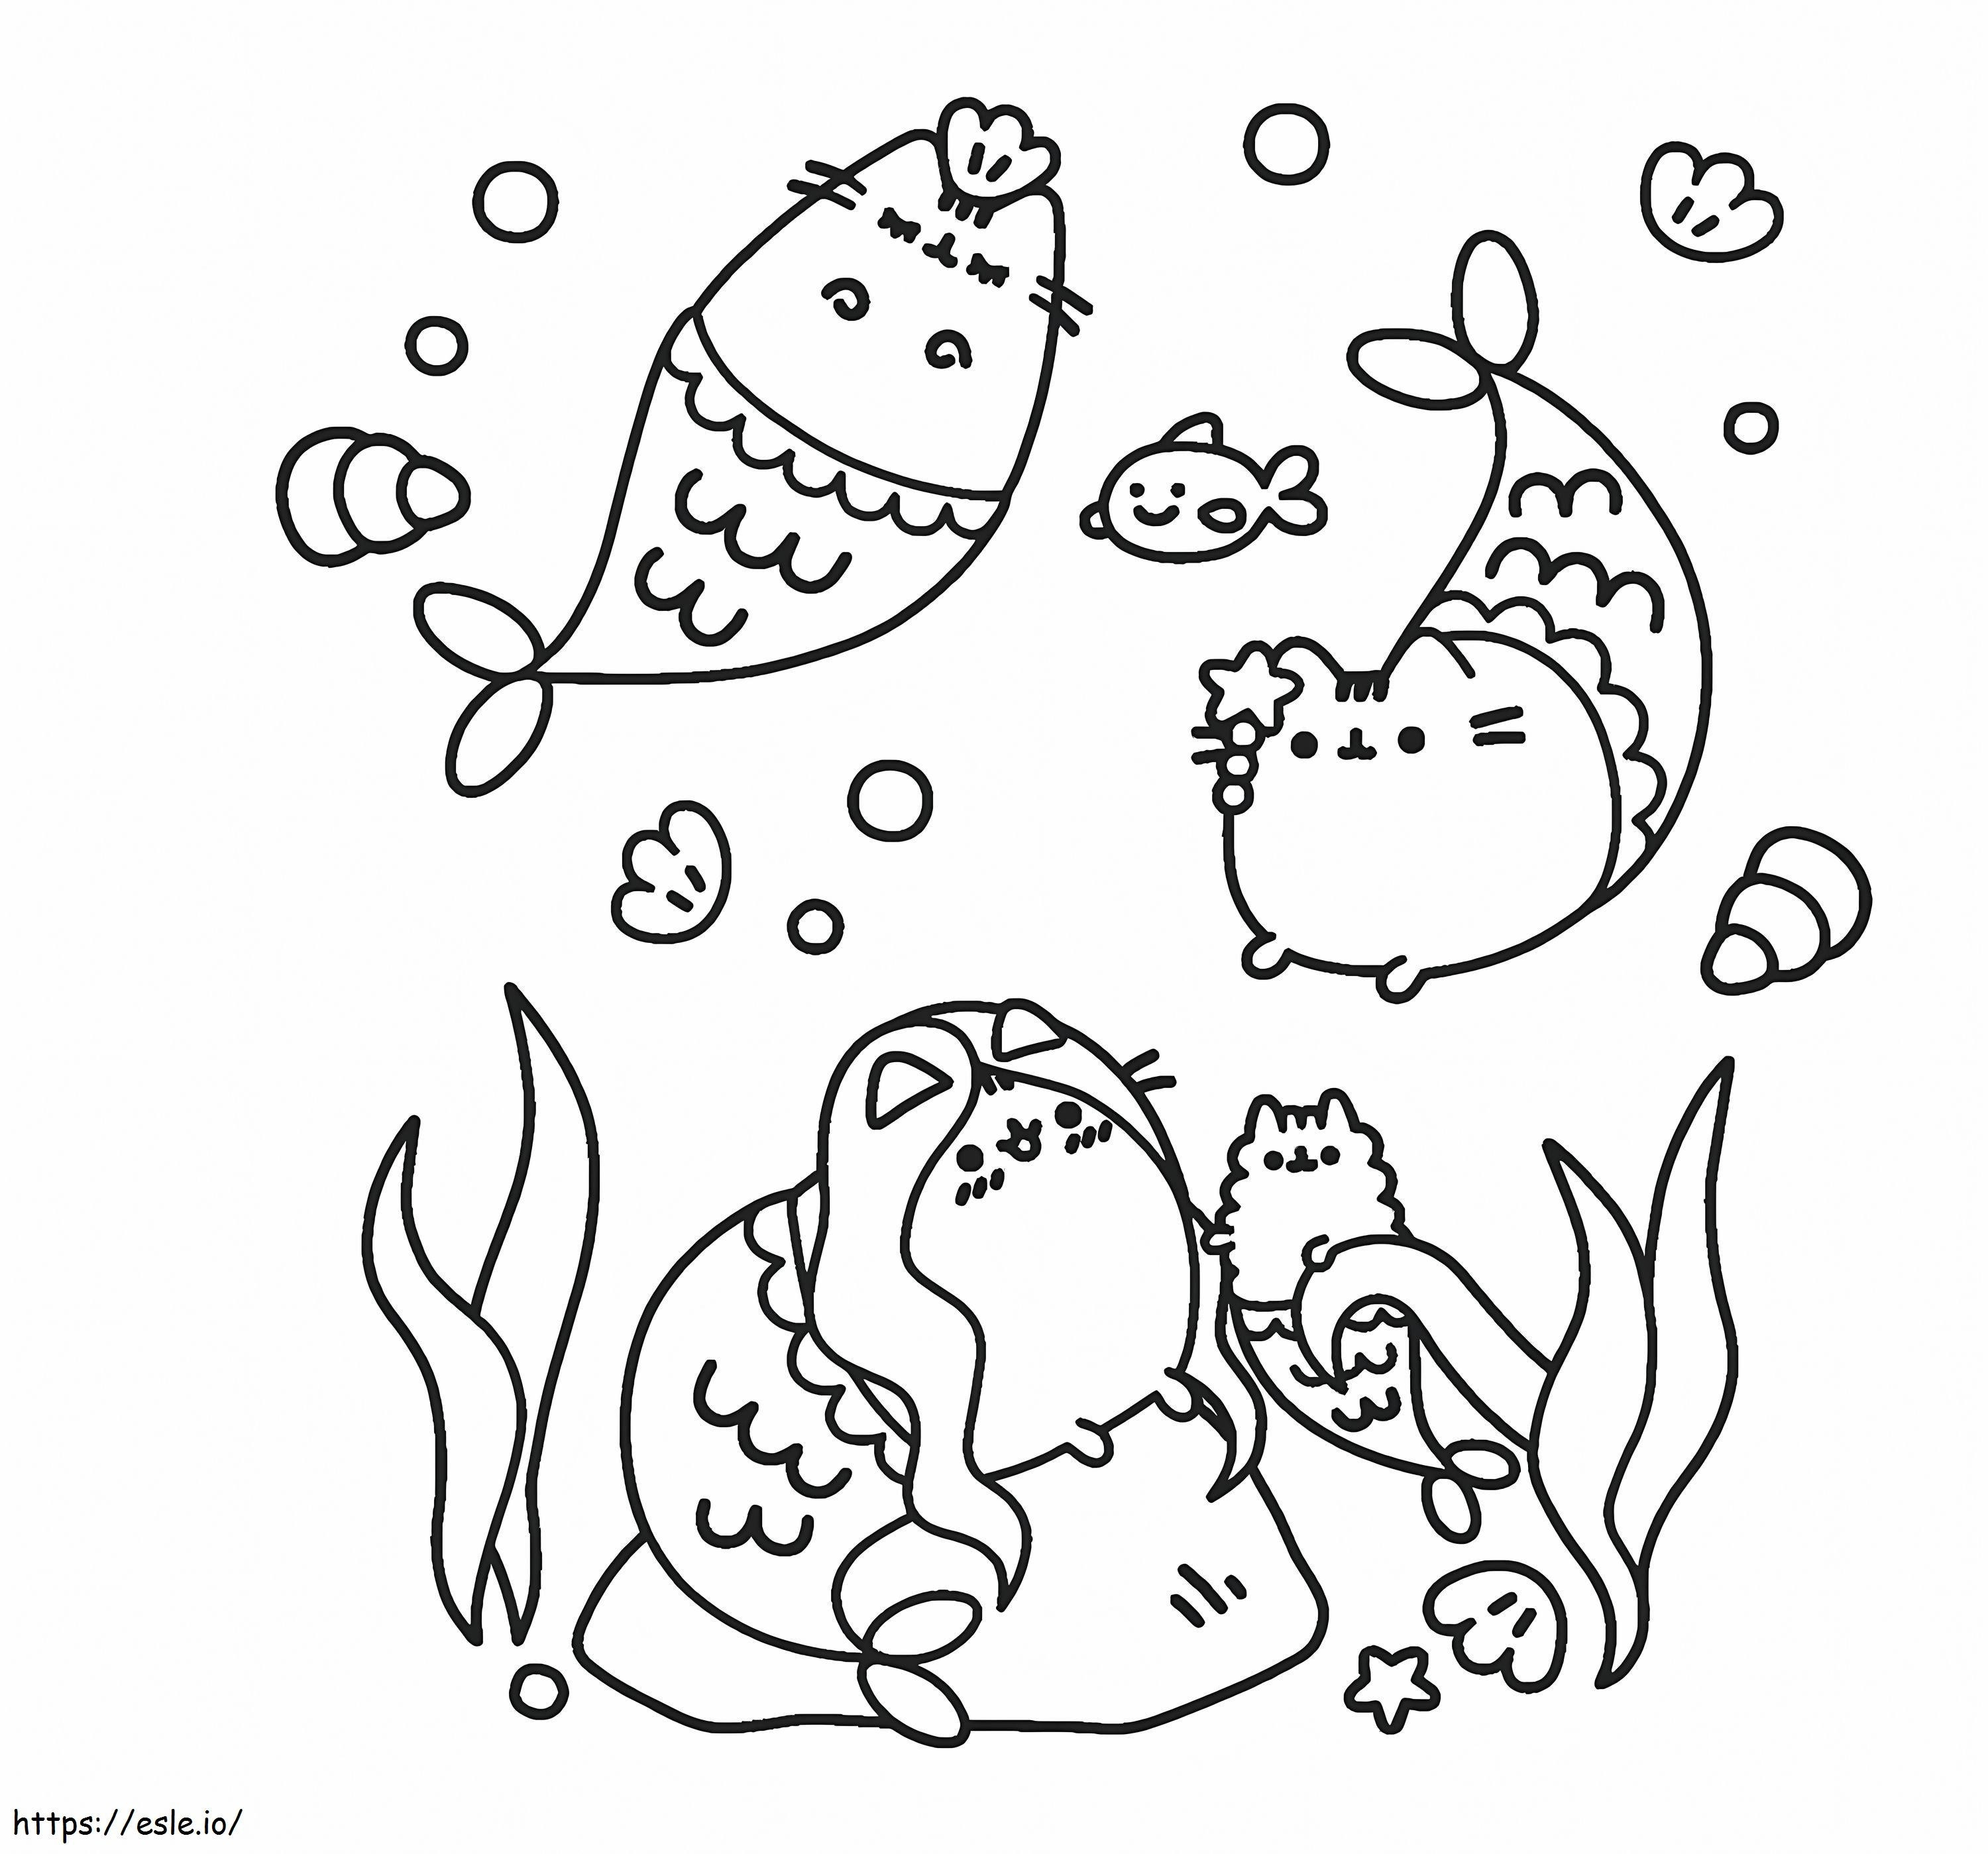 Four Pusheen Mermaid coloring page